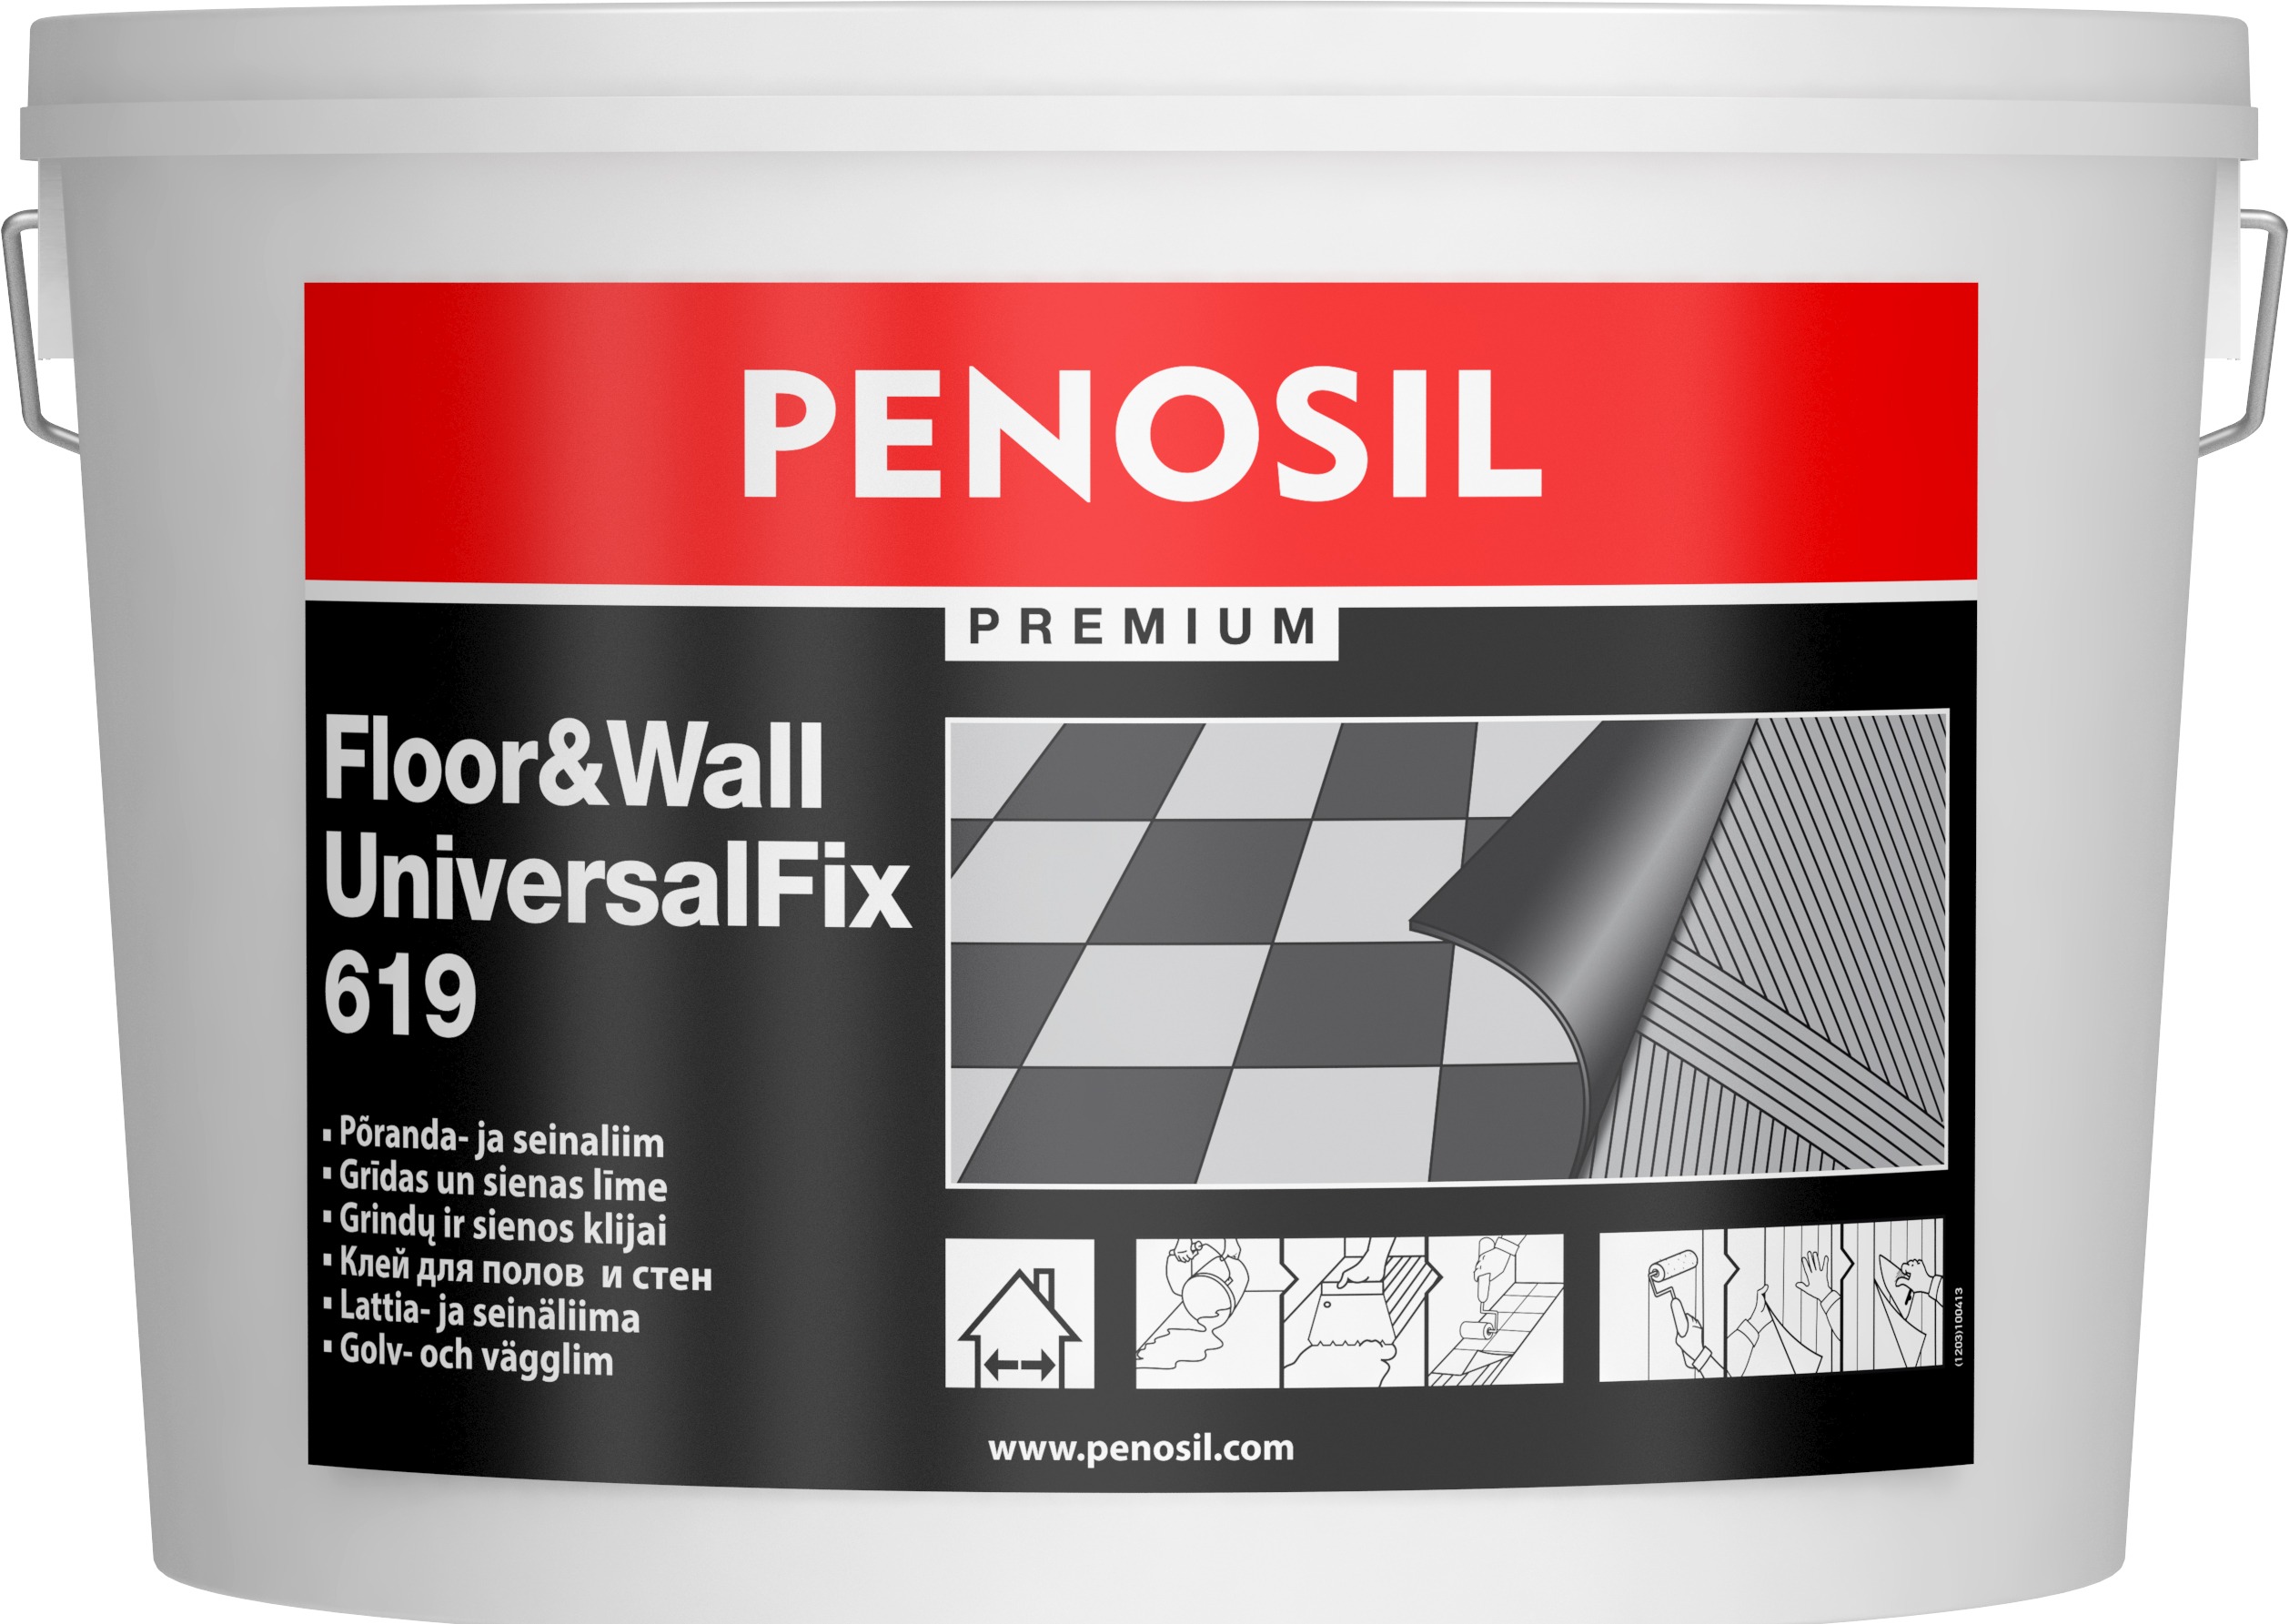 PENOSIL Premium Floor&Wall UniversalFix 619 k     